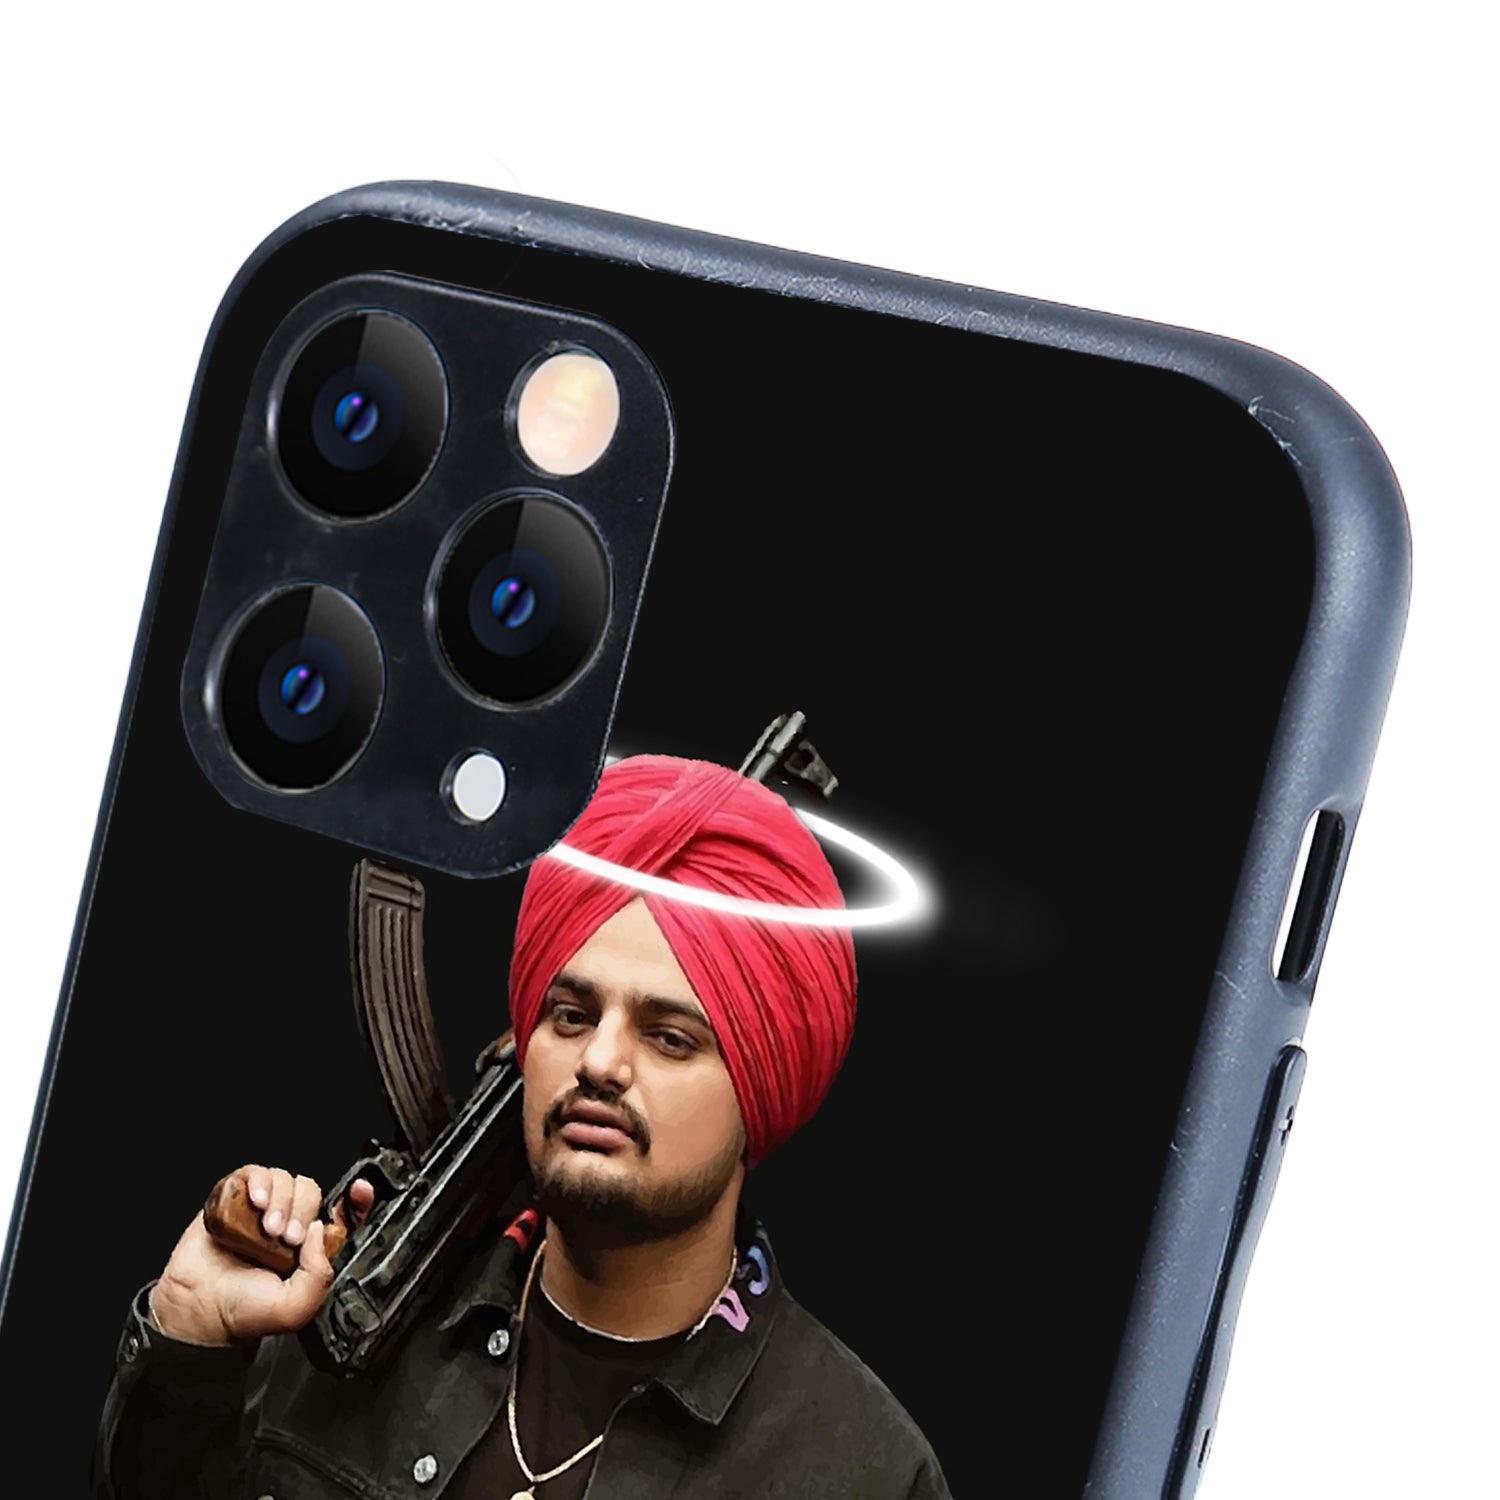 Legend 2.0 Sidhu Moosewala iPhone 11 Pro Case